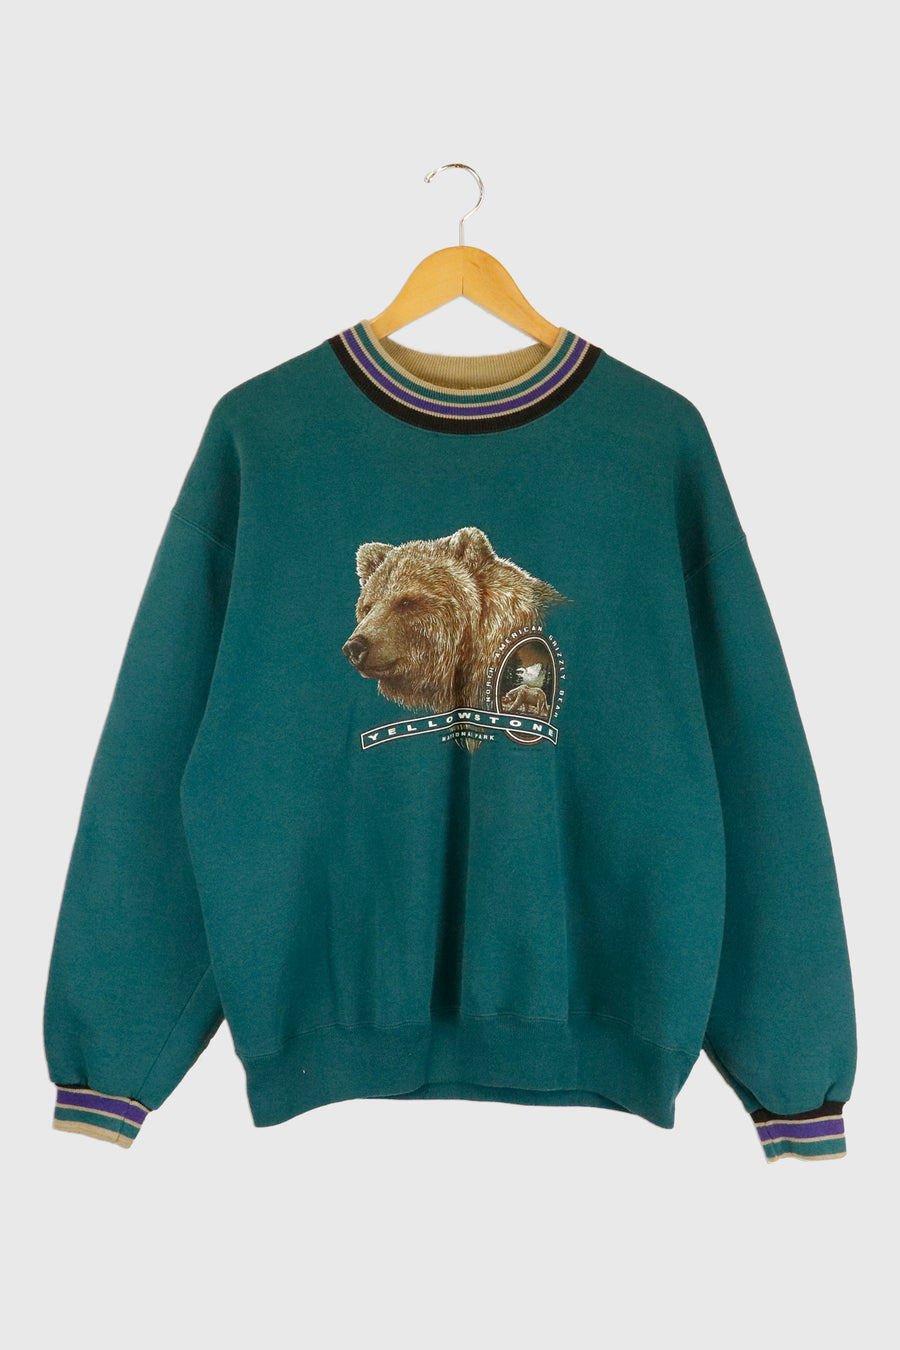 Vintage Yellowstone Grizzly Bear Graphic Sweatshirt Sz L